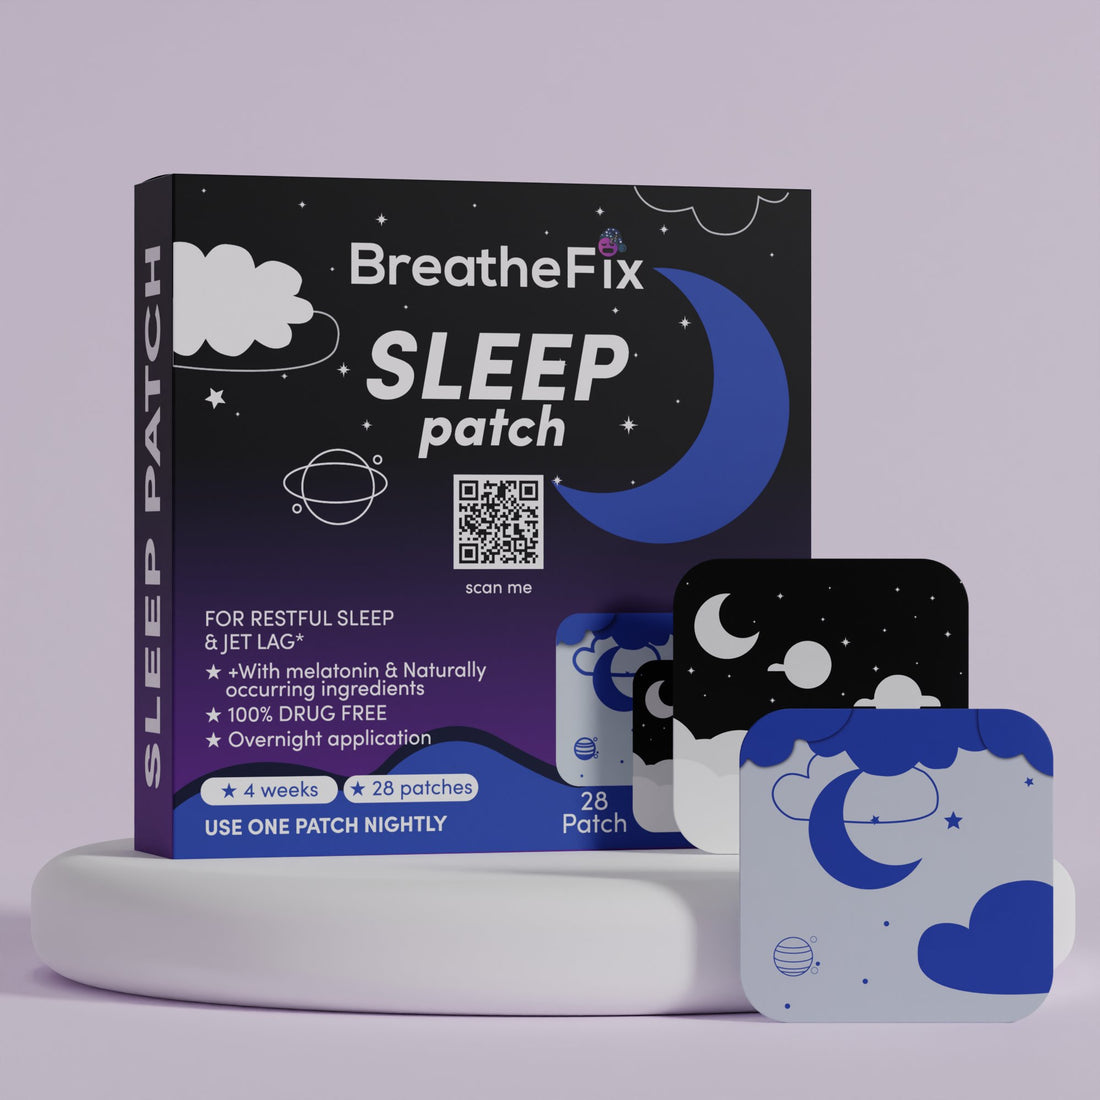 Sleep Patch 3 Months Supply - BreatheFix